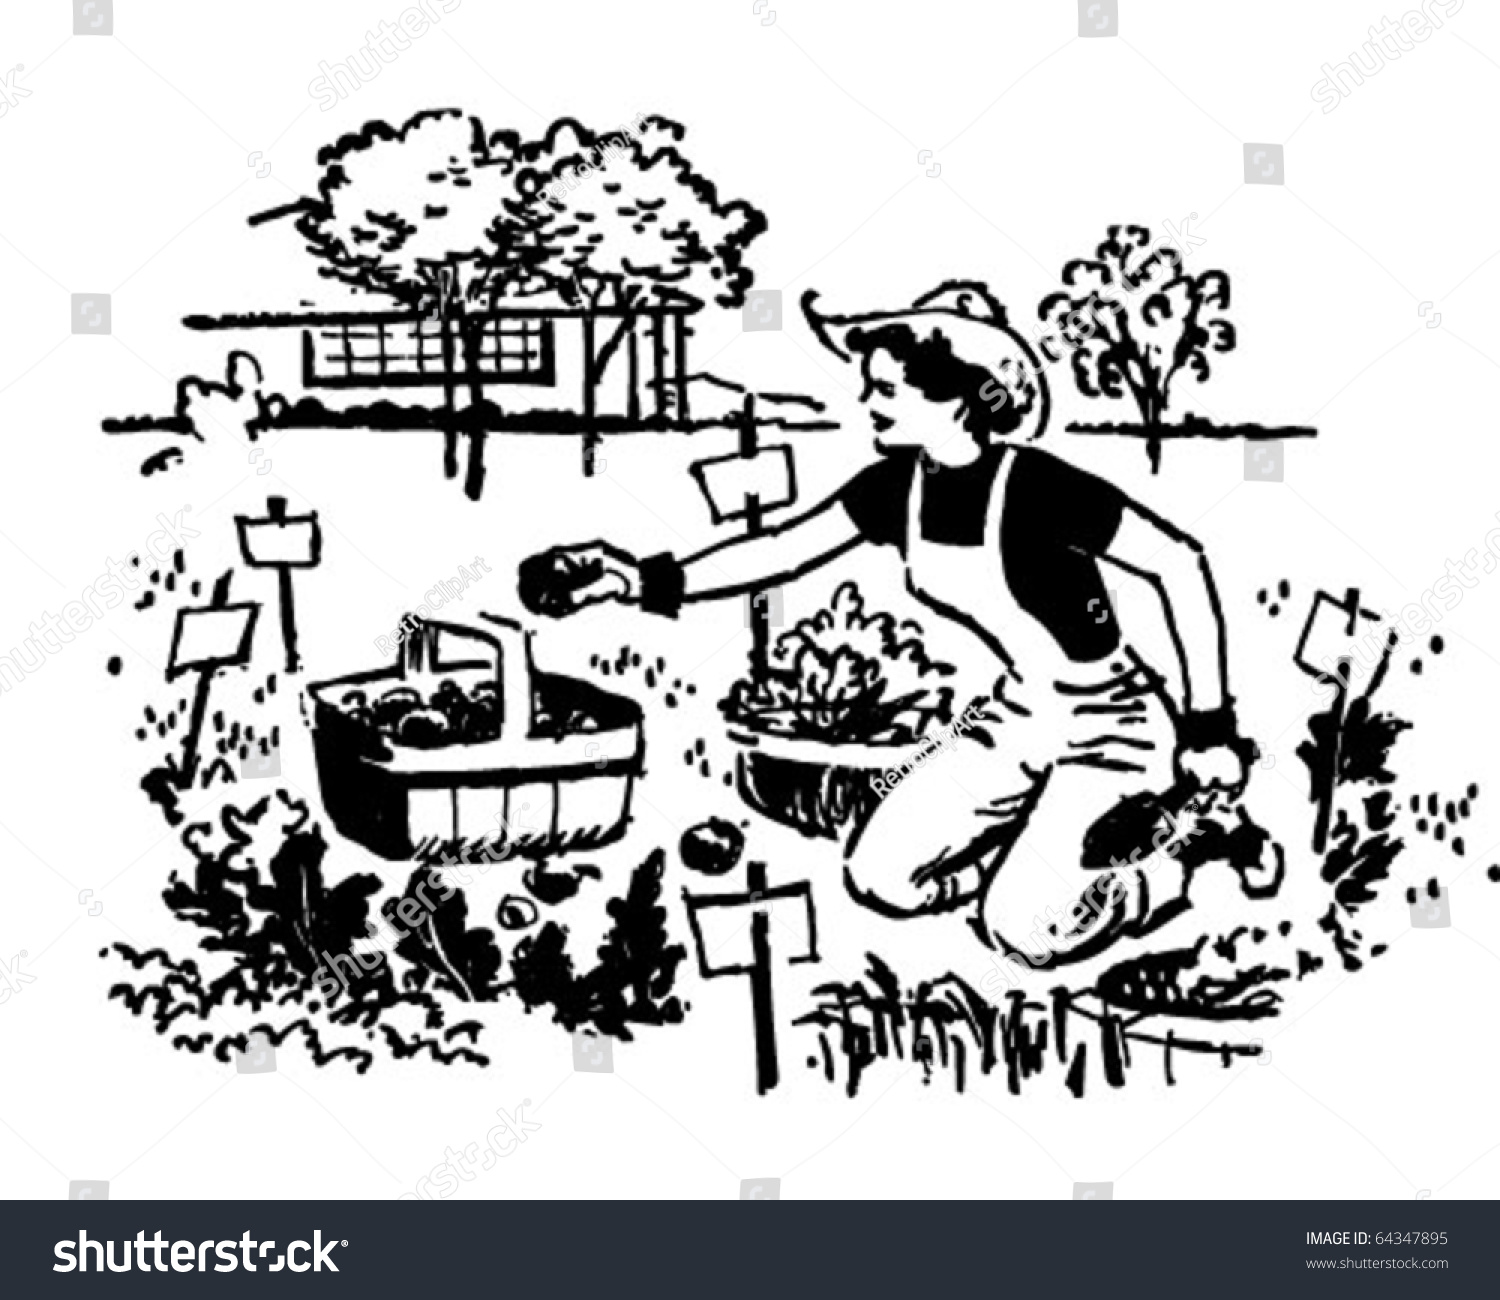 Woman Gardening - Retro Clipart Illustration - 64347895 : Shutterstock